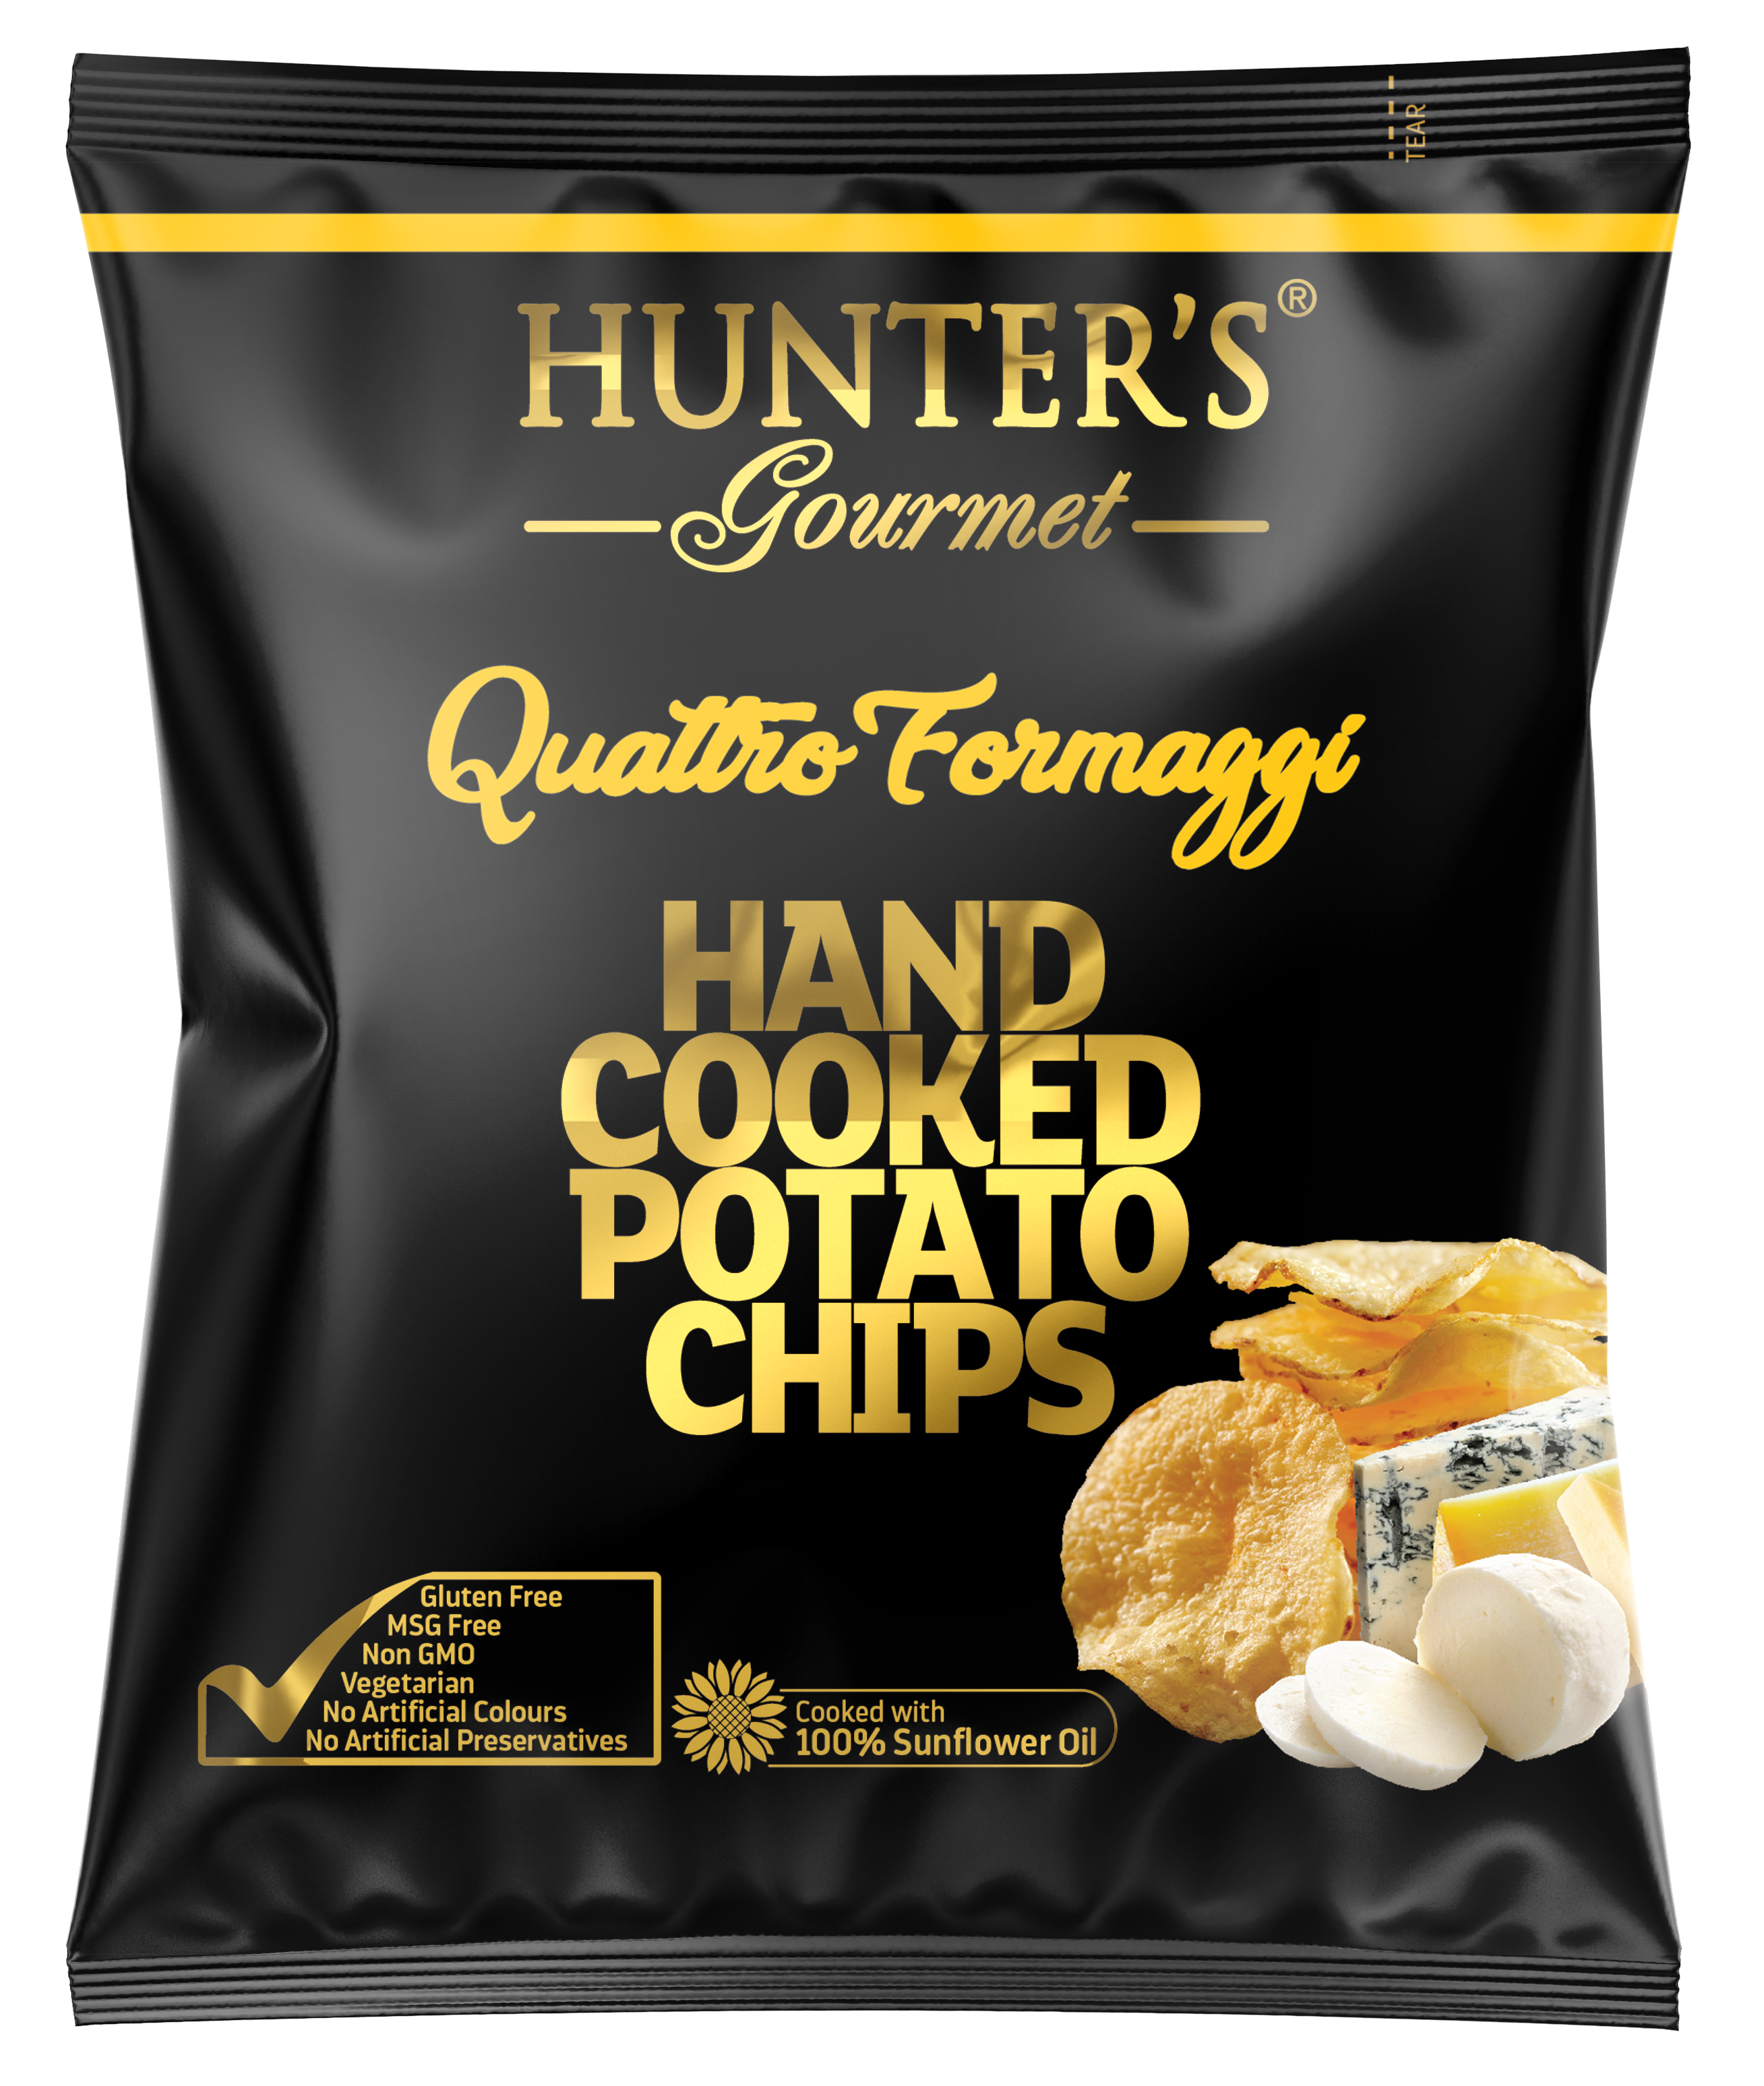 Hunter's Gourmet Hand Cooked Potato Chips Quattro Formaggi 50 units per case 25 g